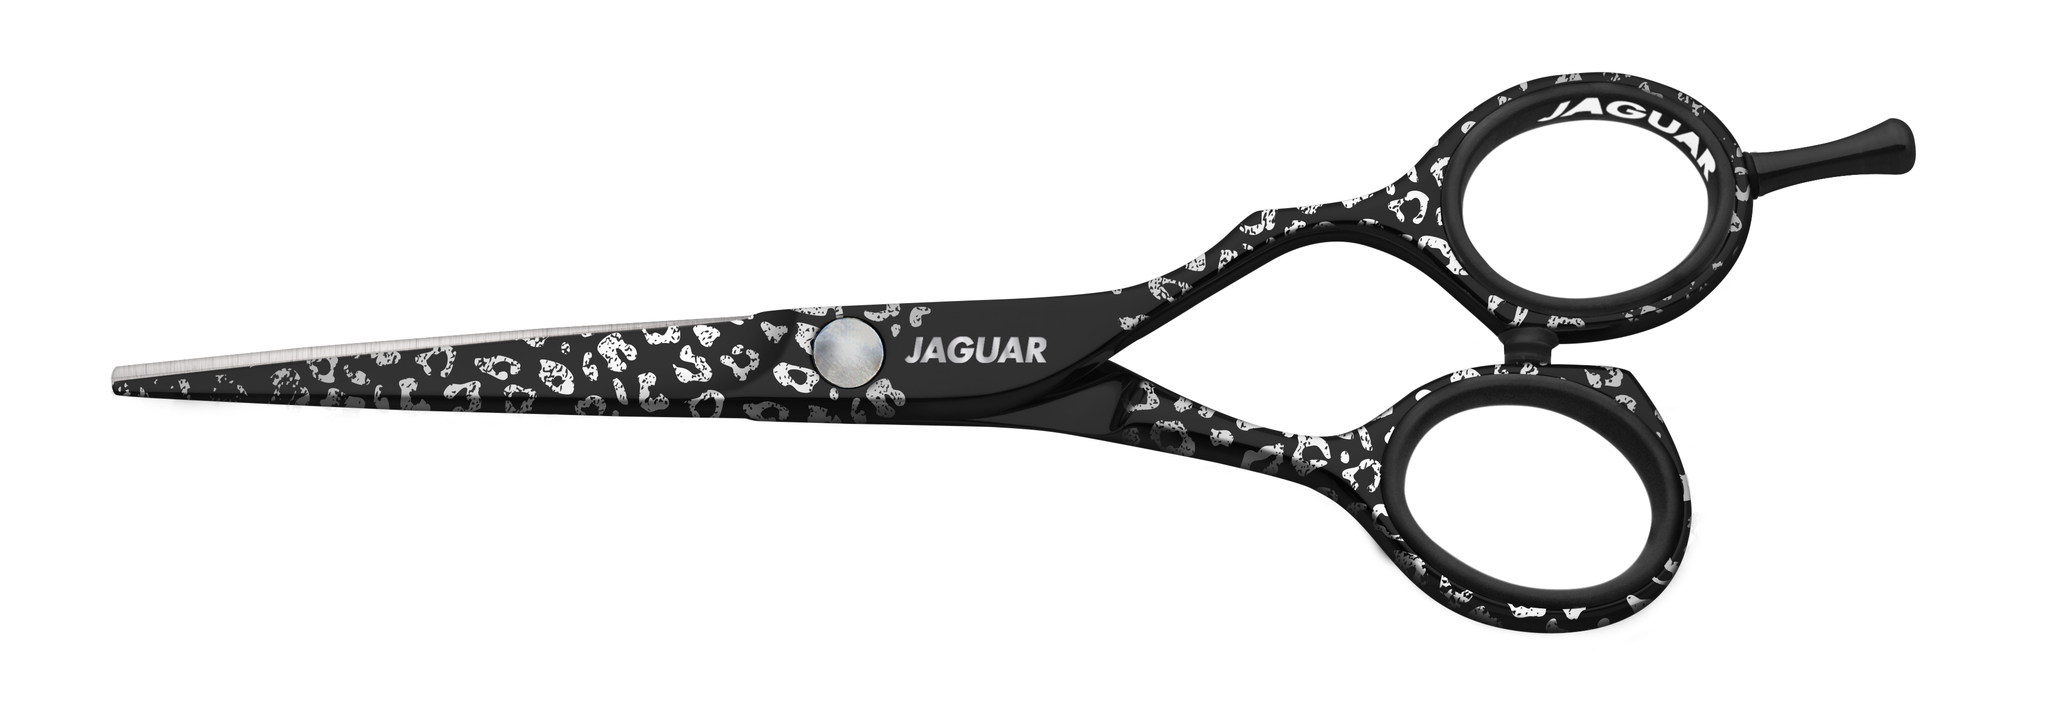 jaguar Silver Line Wild Temptation 5.5"